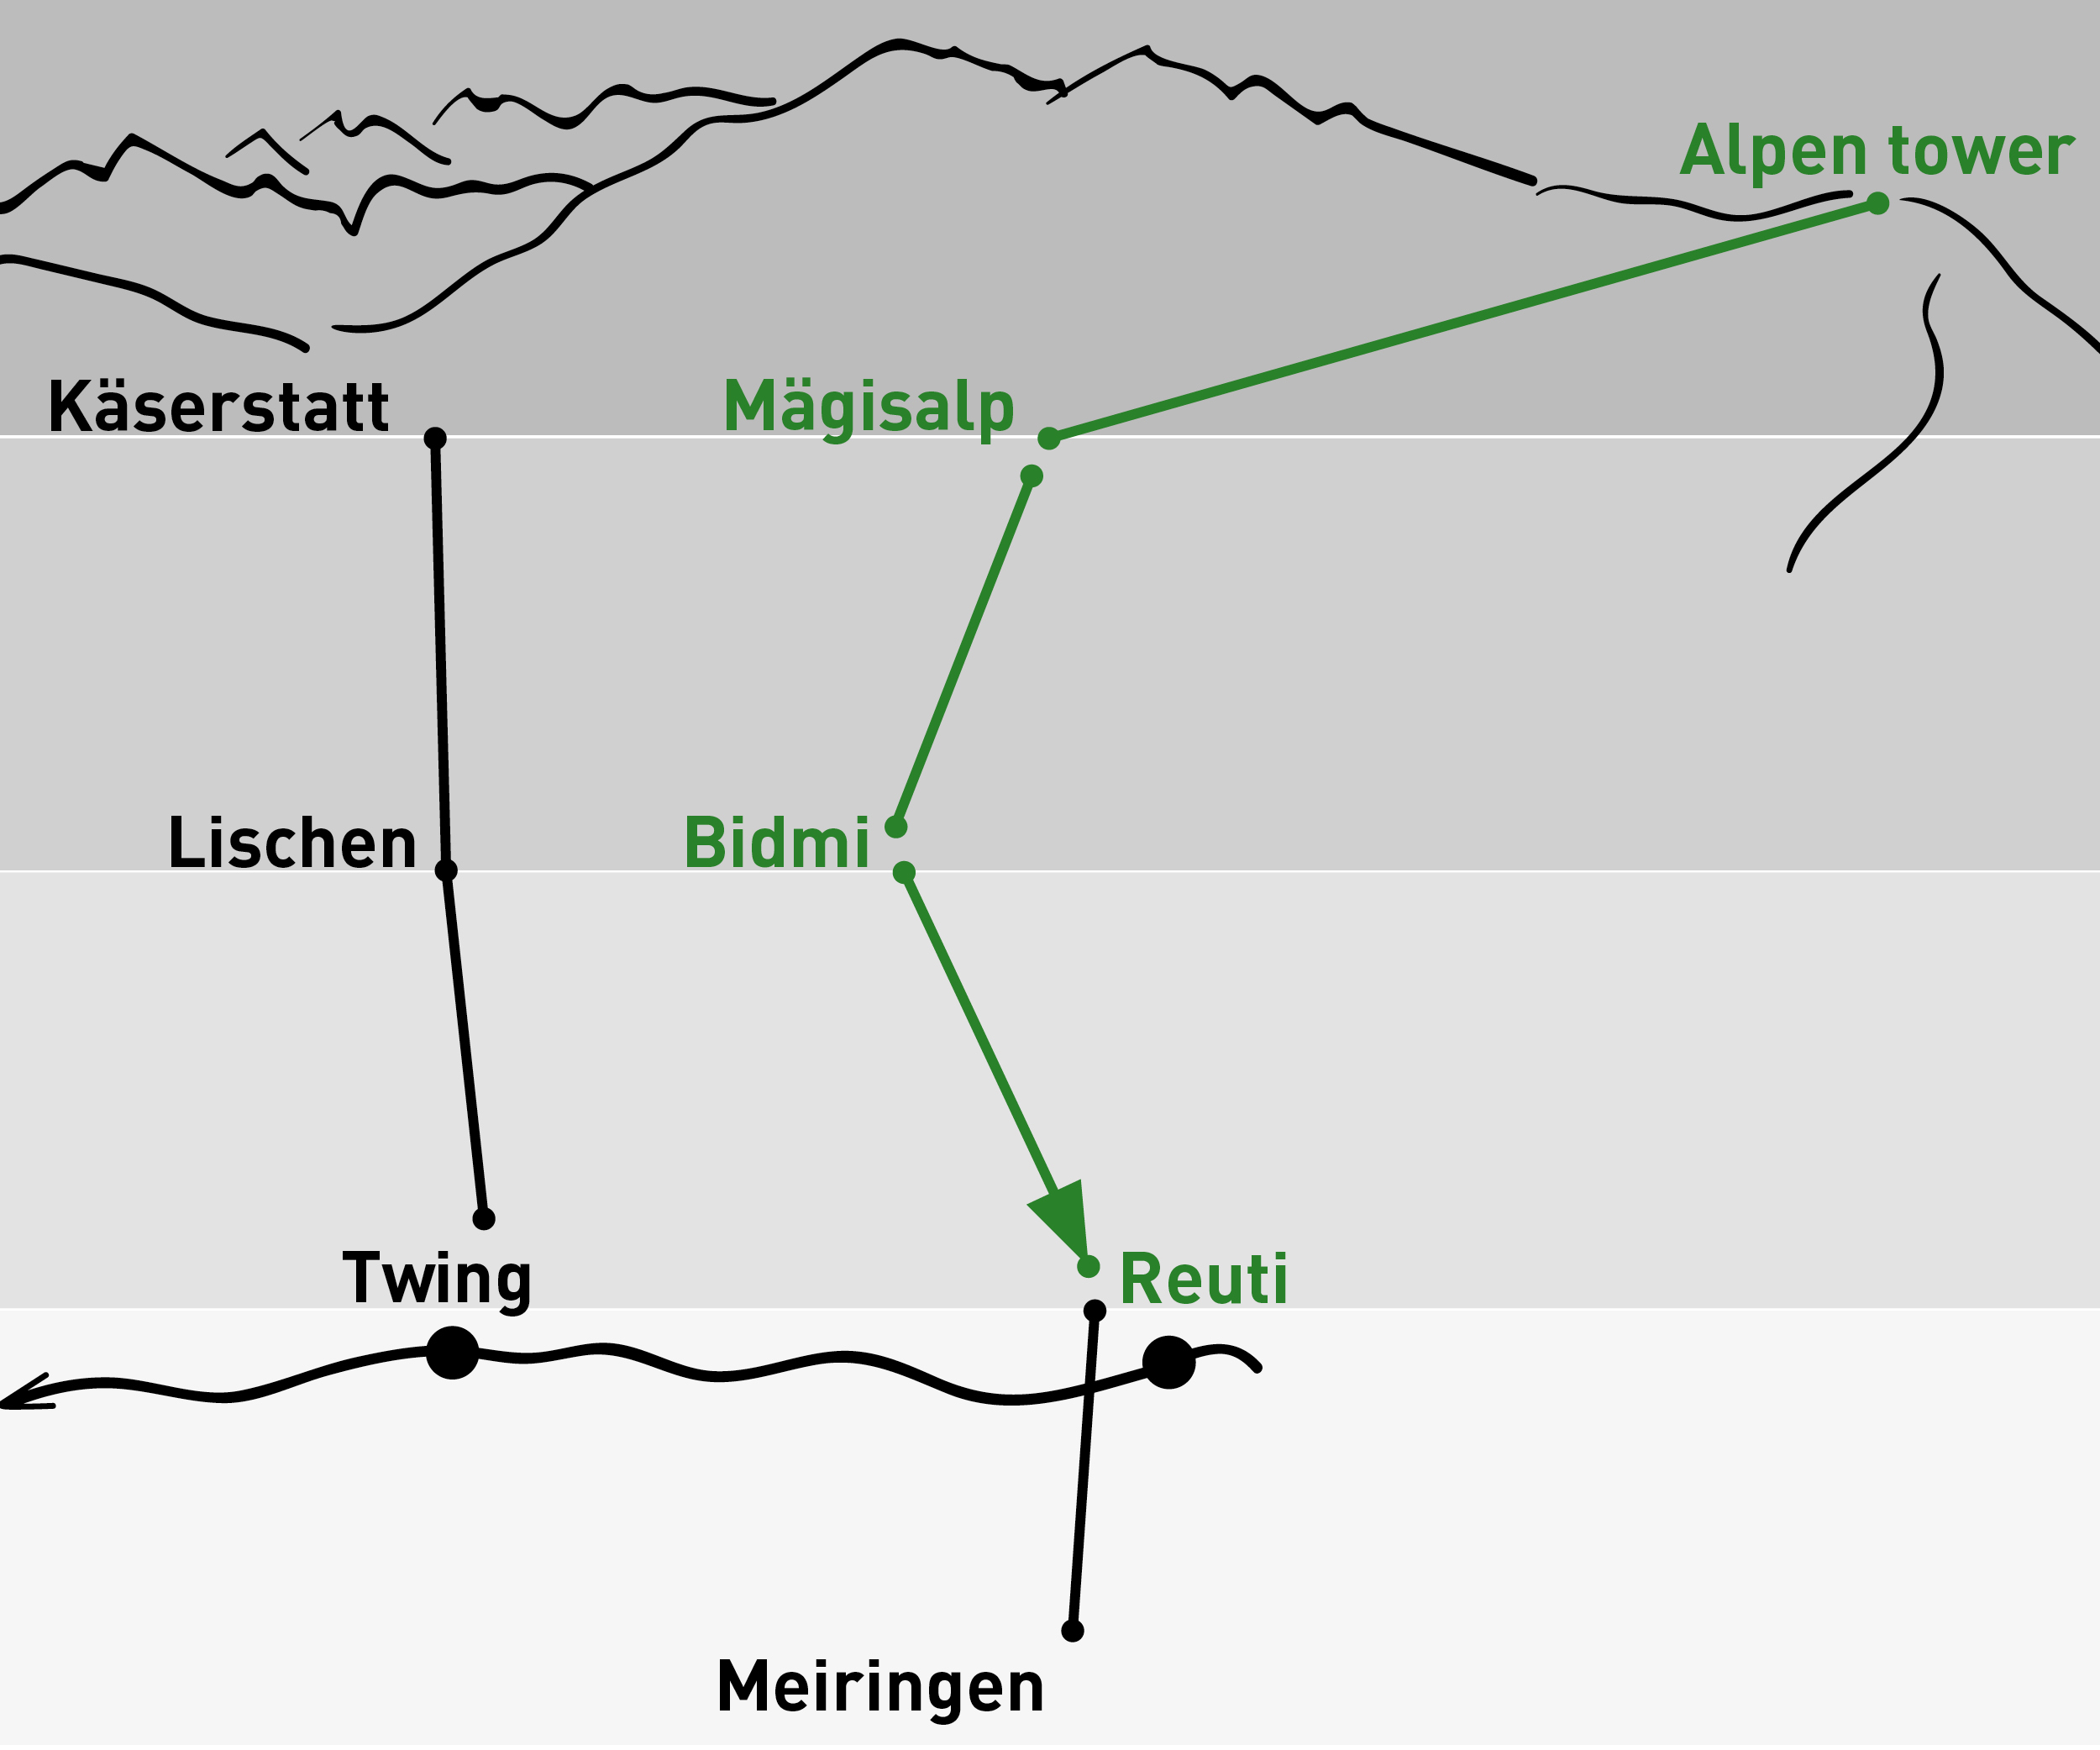 Alpen tower - Reuti | One-way trip